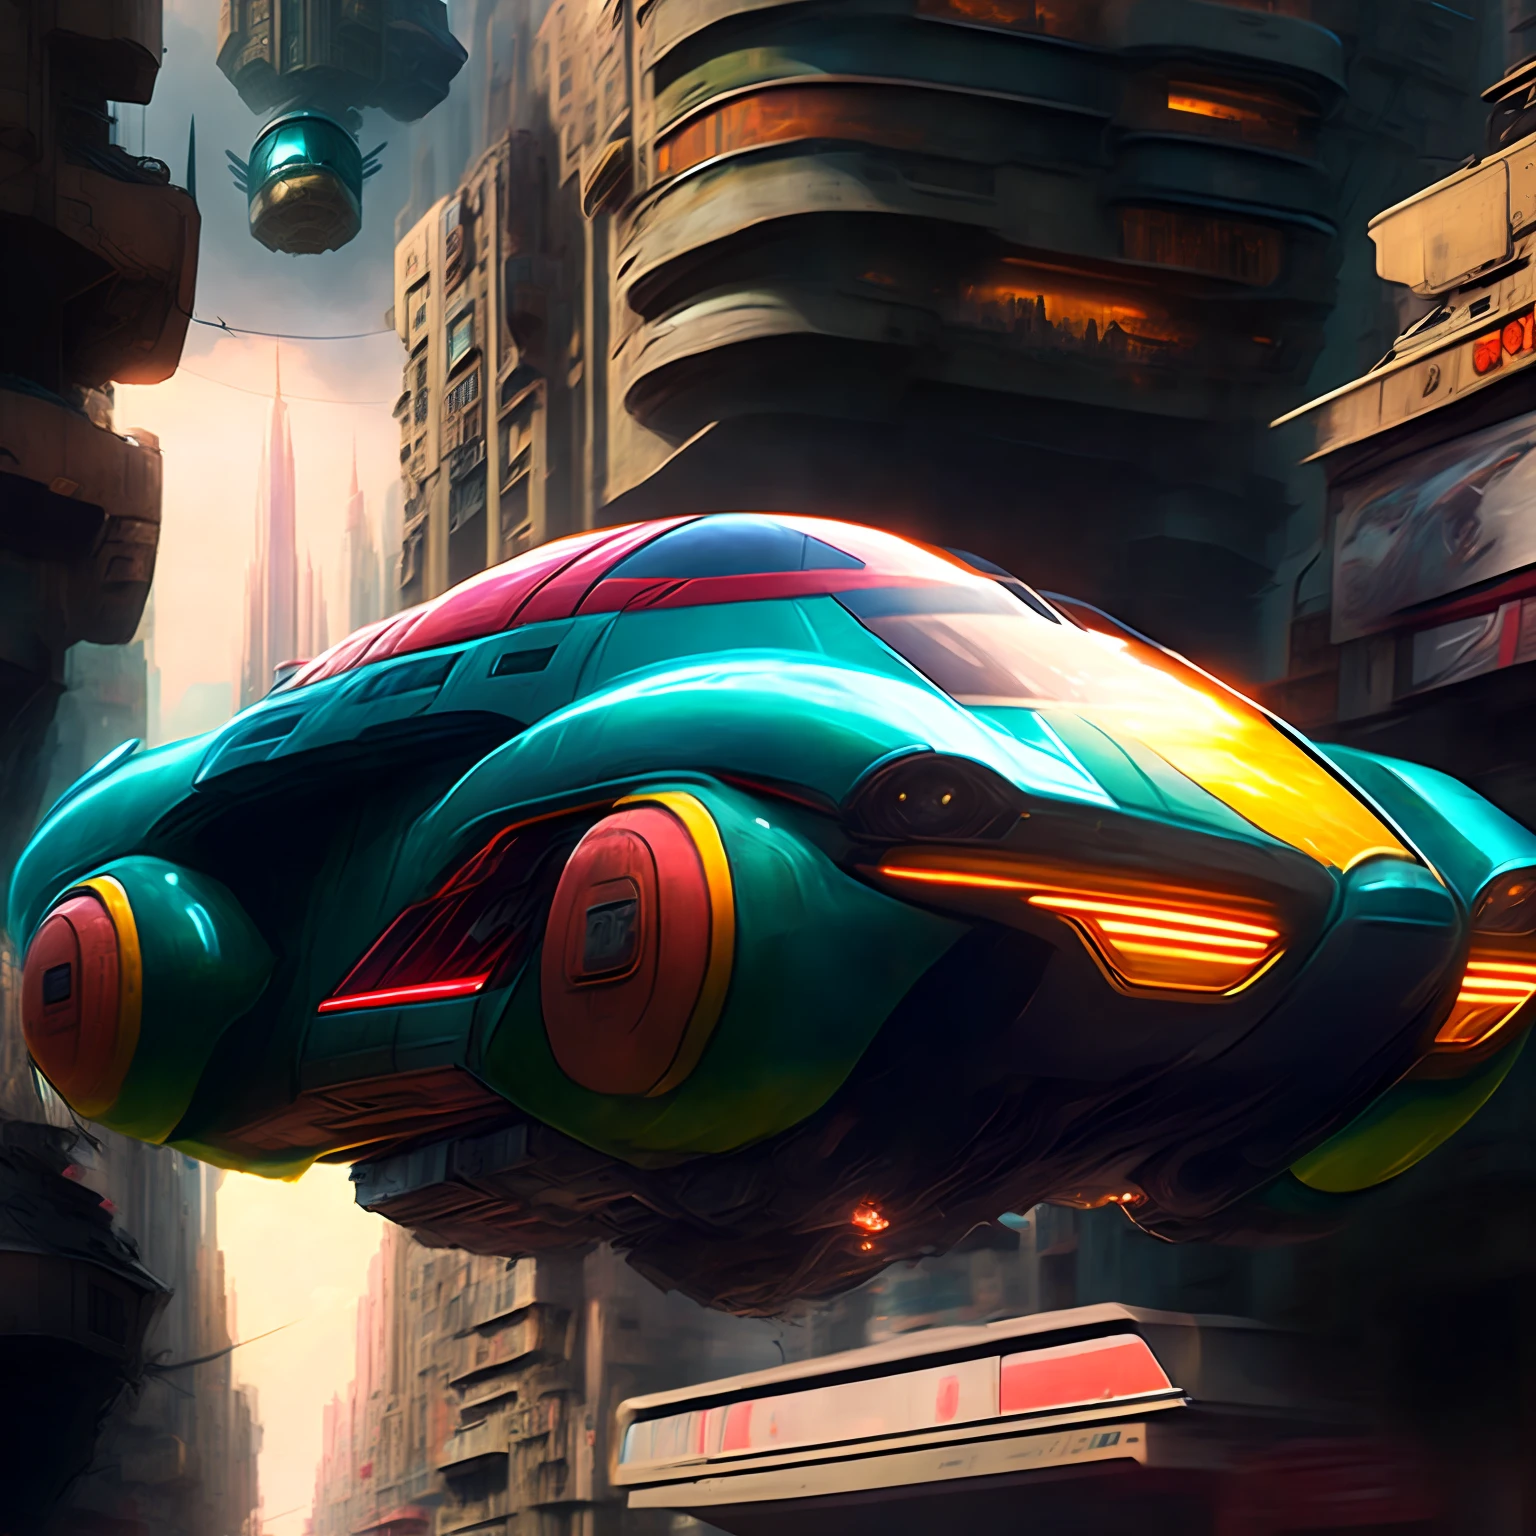 Carro flutuante em Mega-City One, juiz Dredd, realista, cinematic